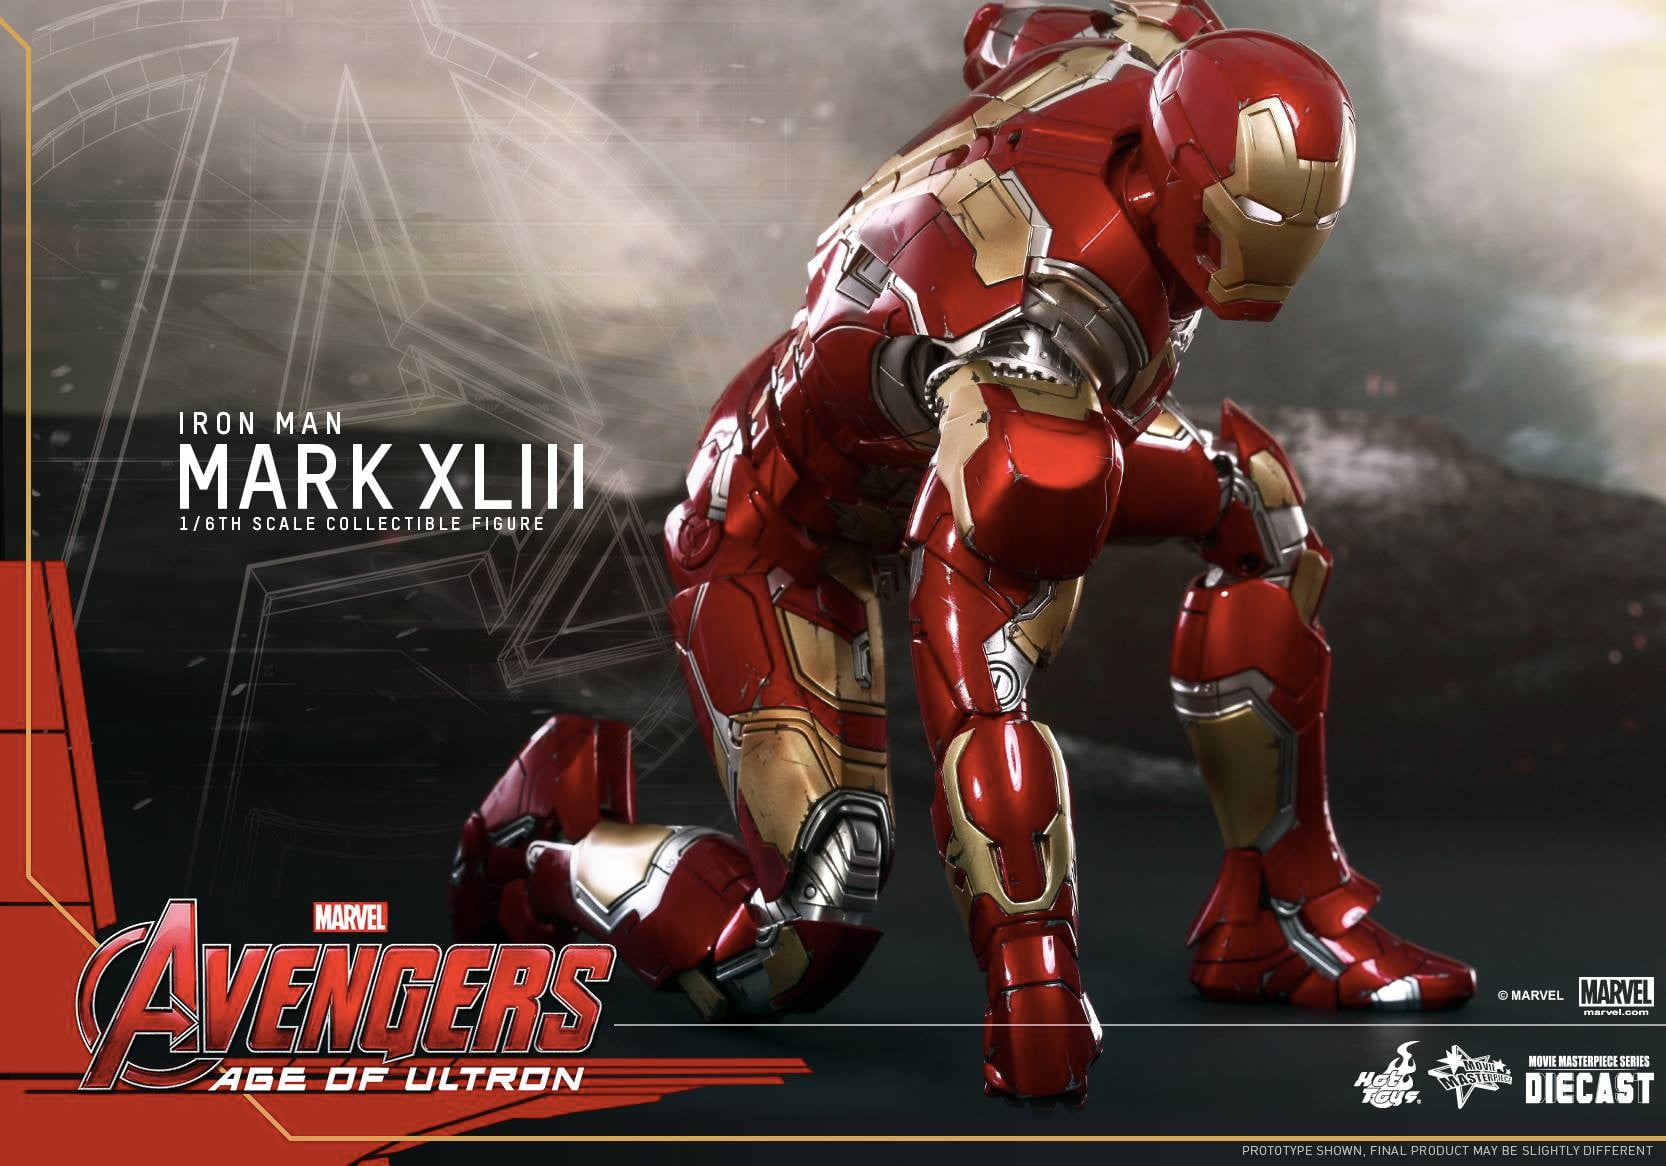 Marvel Avengers Iron-Man poster, Iron Man